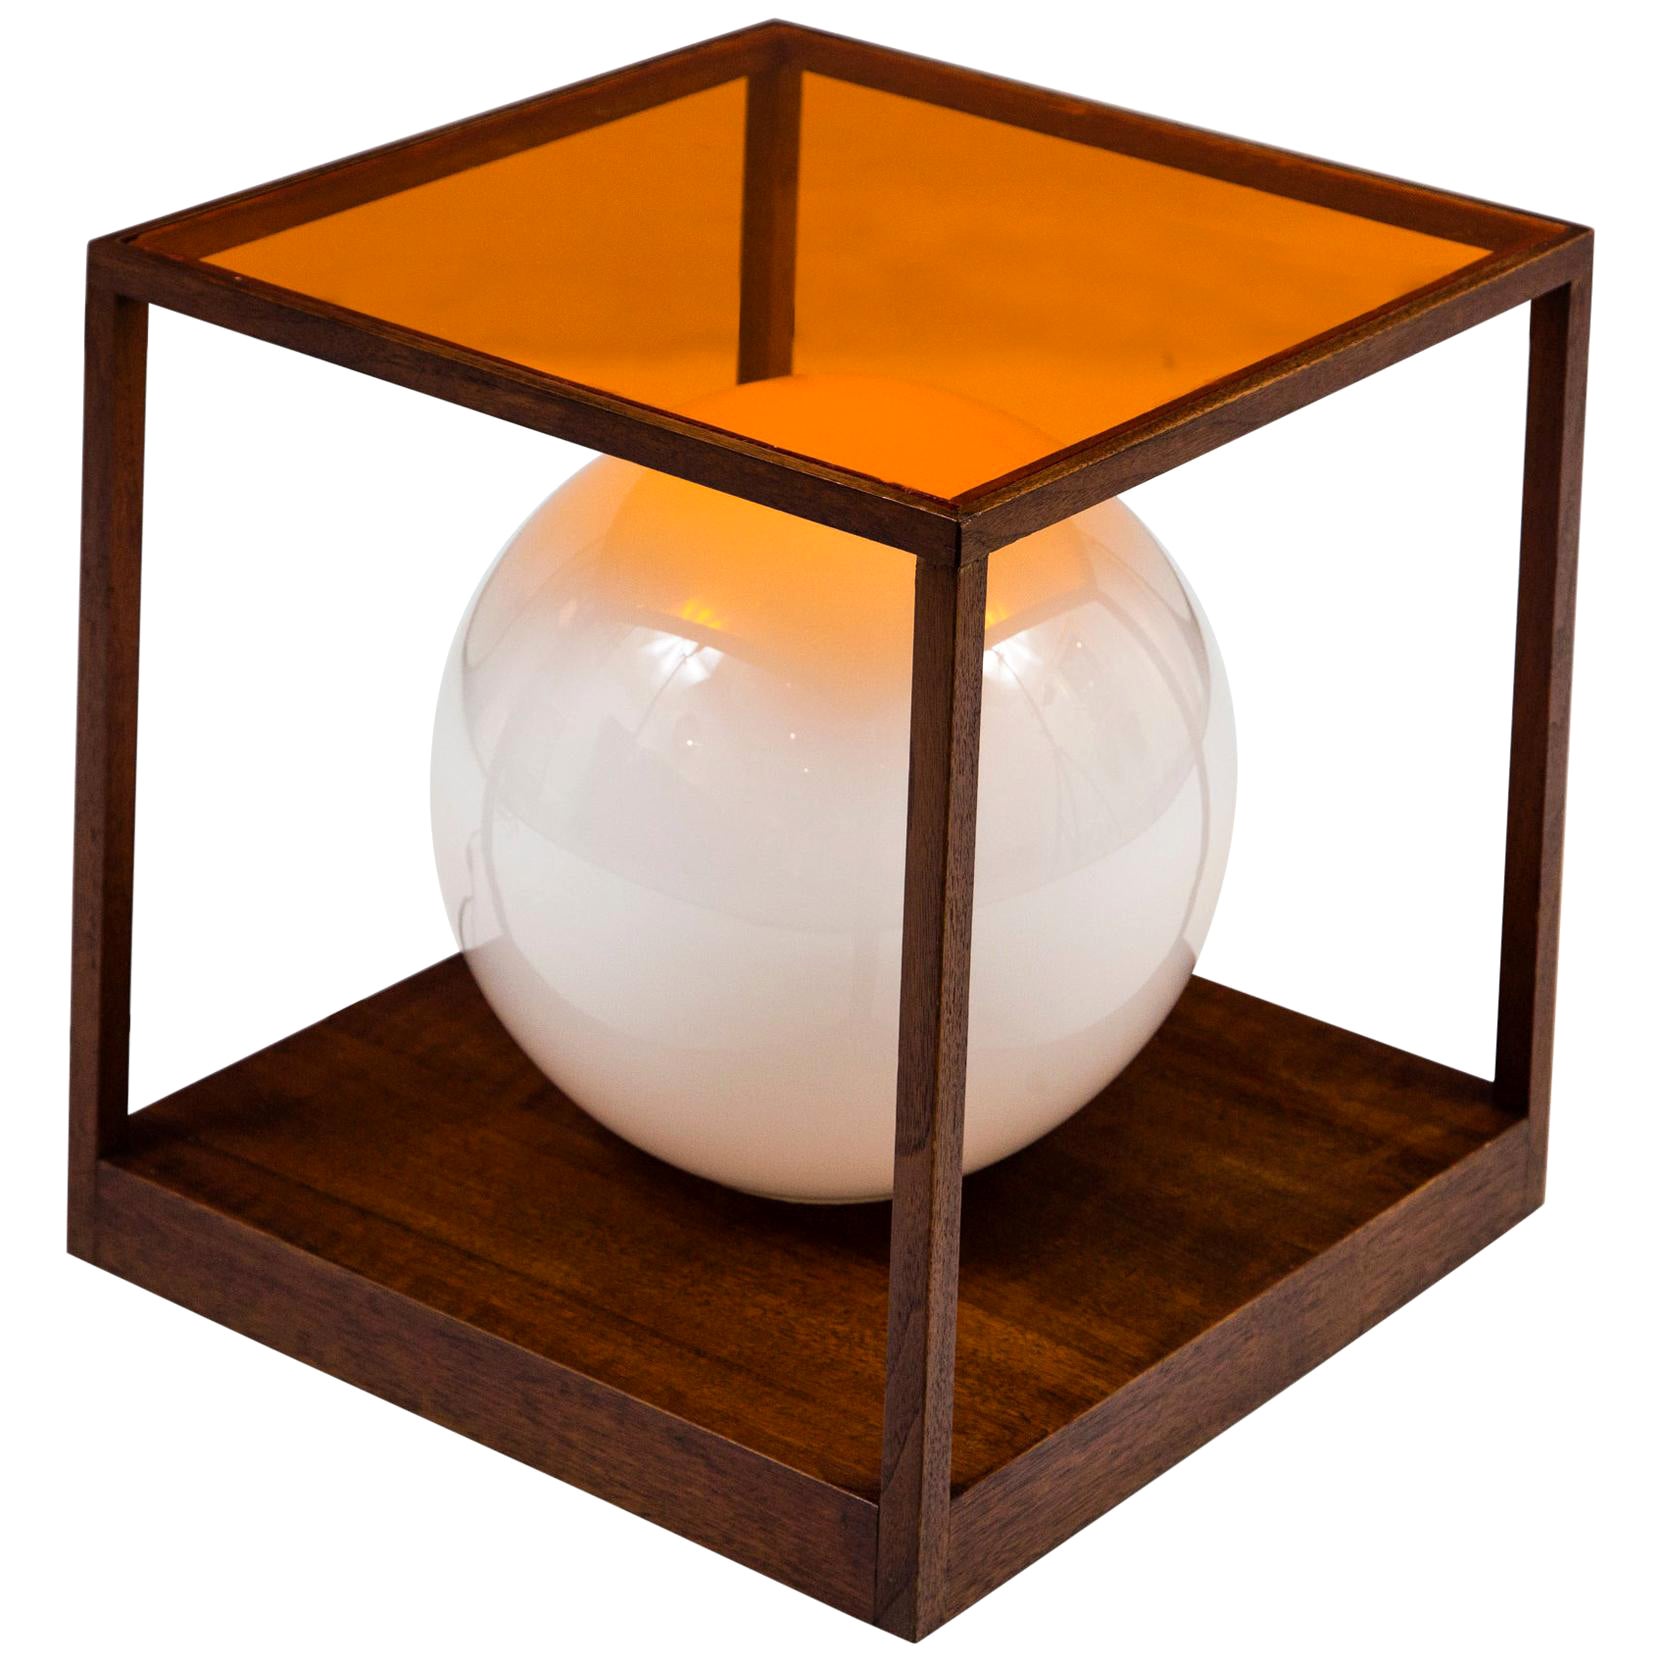 Paul Mayen Orange Quadrus Light Table for Habitat, 1958